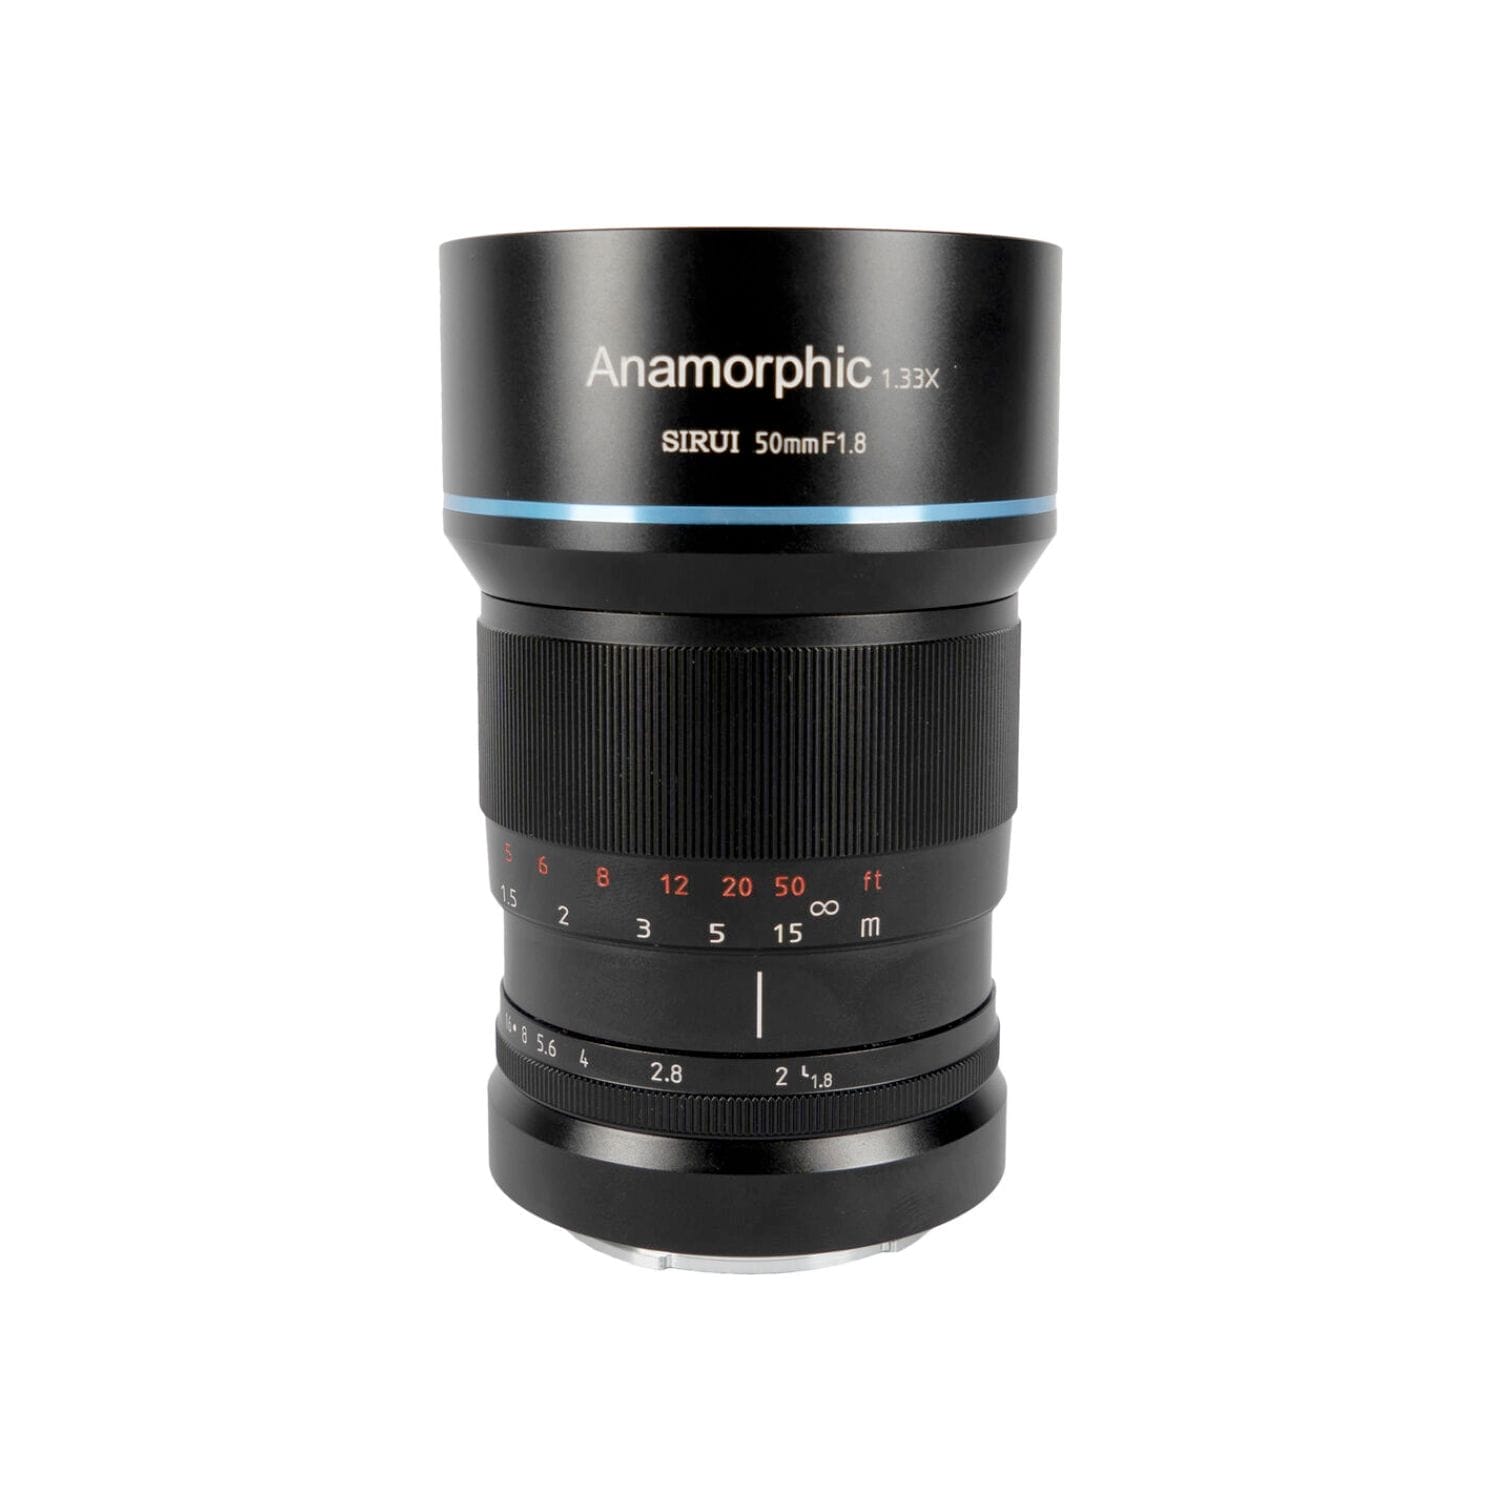 Sirui 50mm F:1.8 1.33x Anamorphic Lens Online Buy Mumbai India 05